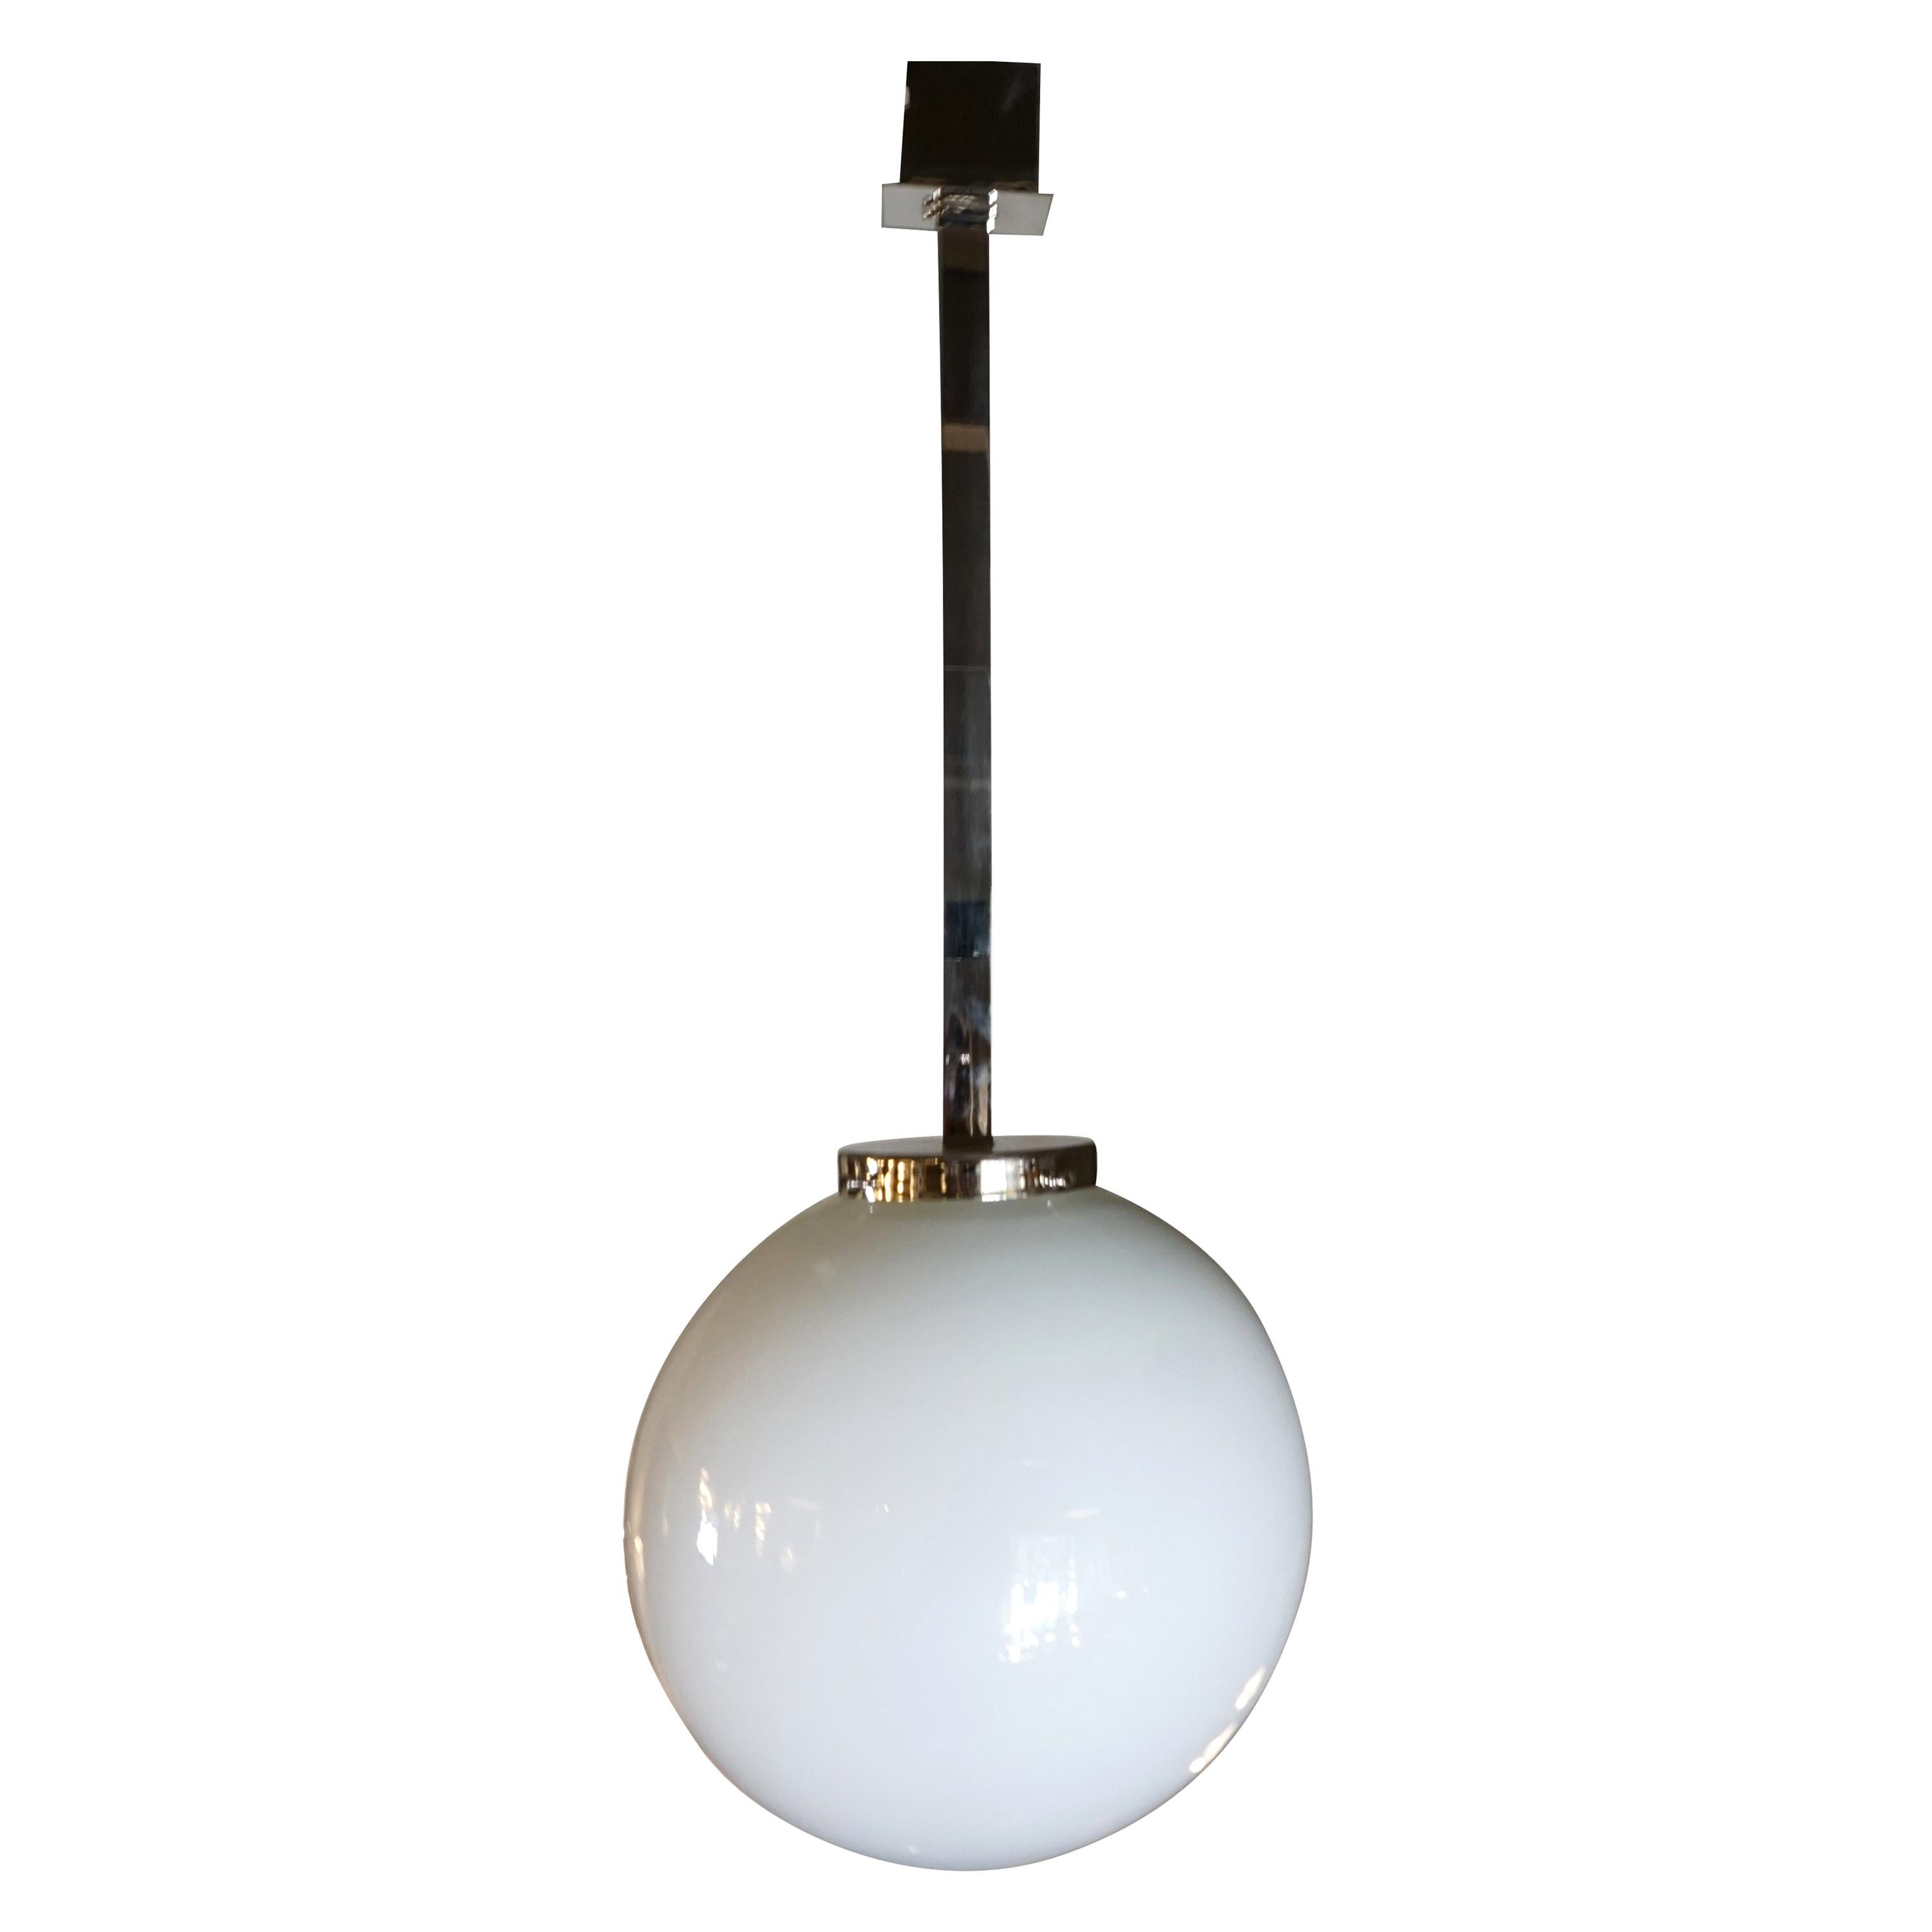 20th Century French Minimalist Glass Pendant, Round Nickel Ceiling Light Fixture